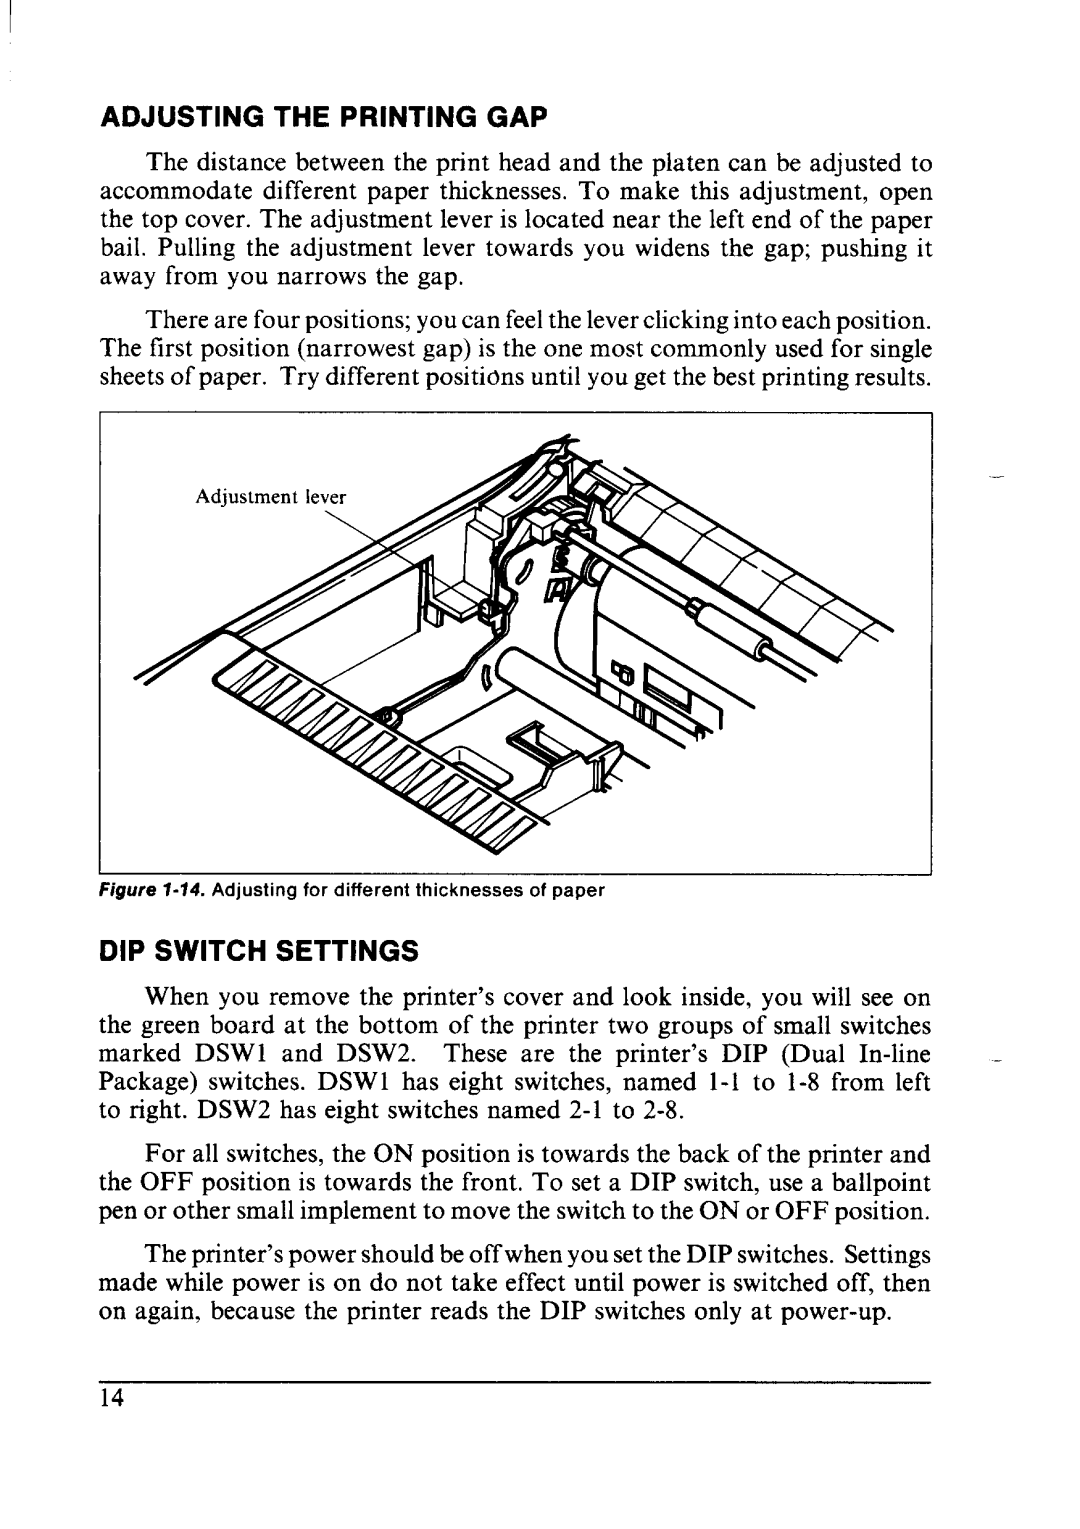 Star Micronics LC24-10 user manual Adjusting the Printing GAP, DIP Switch Settings 